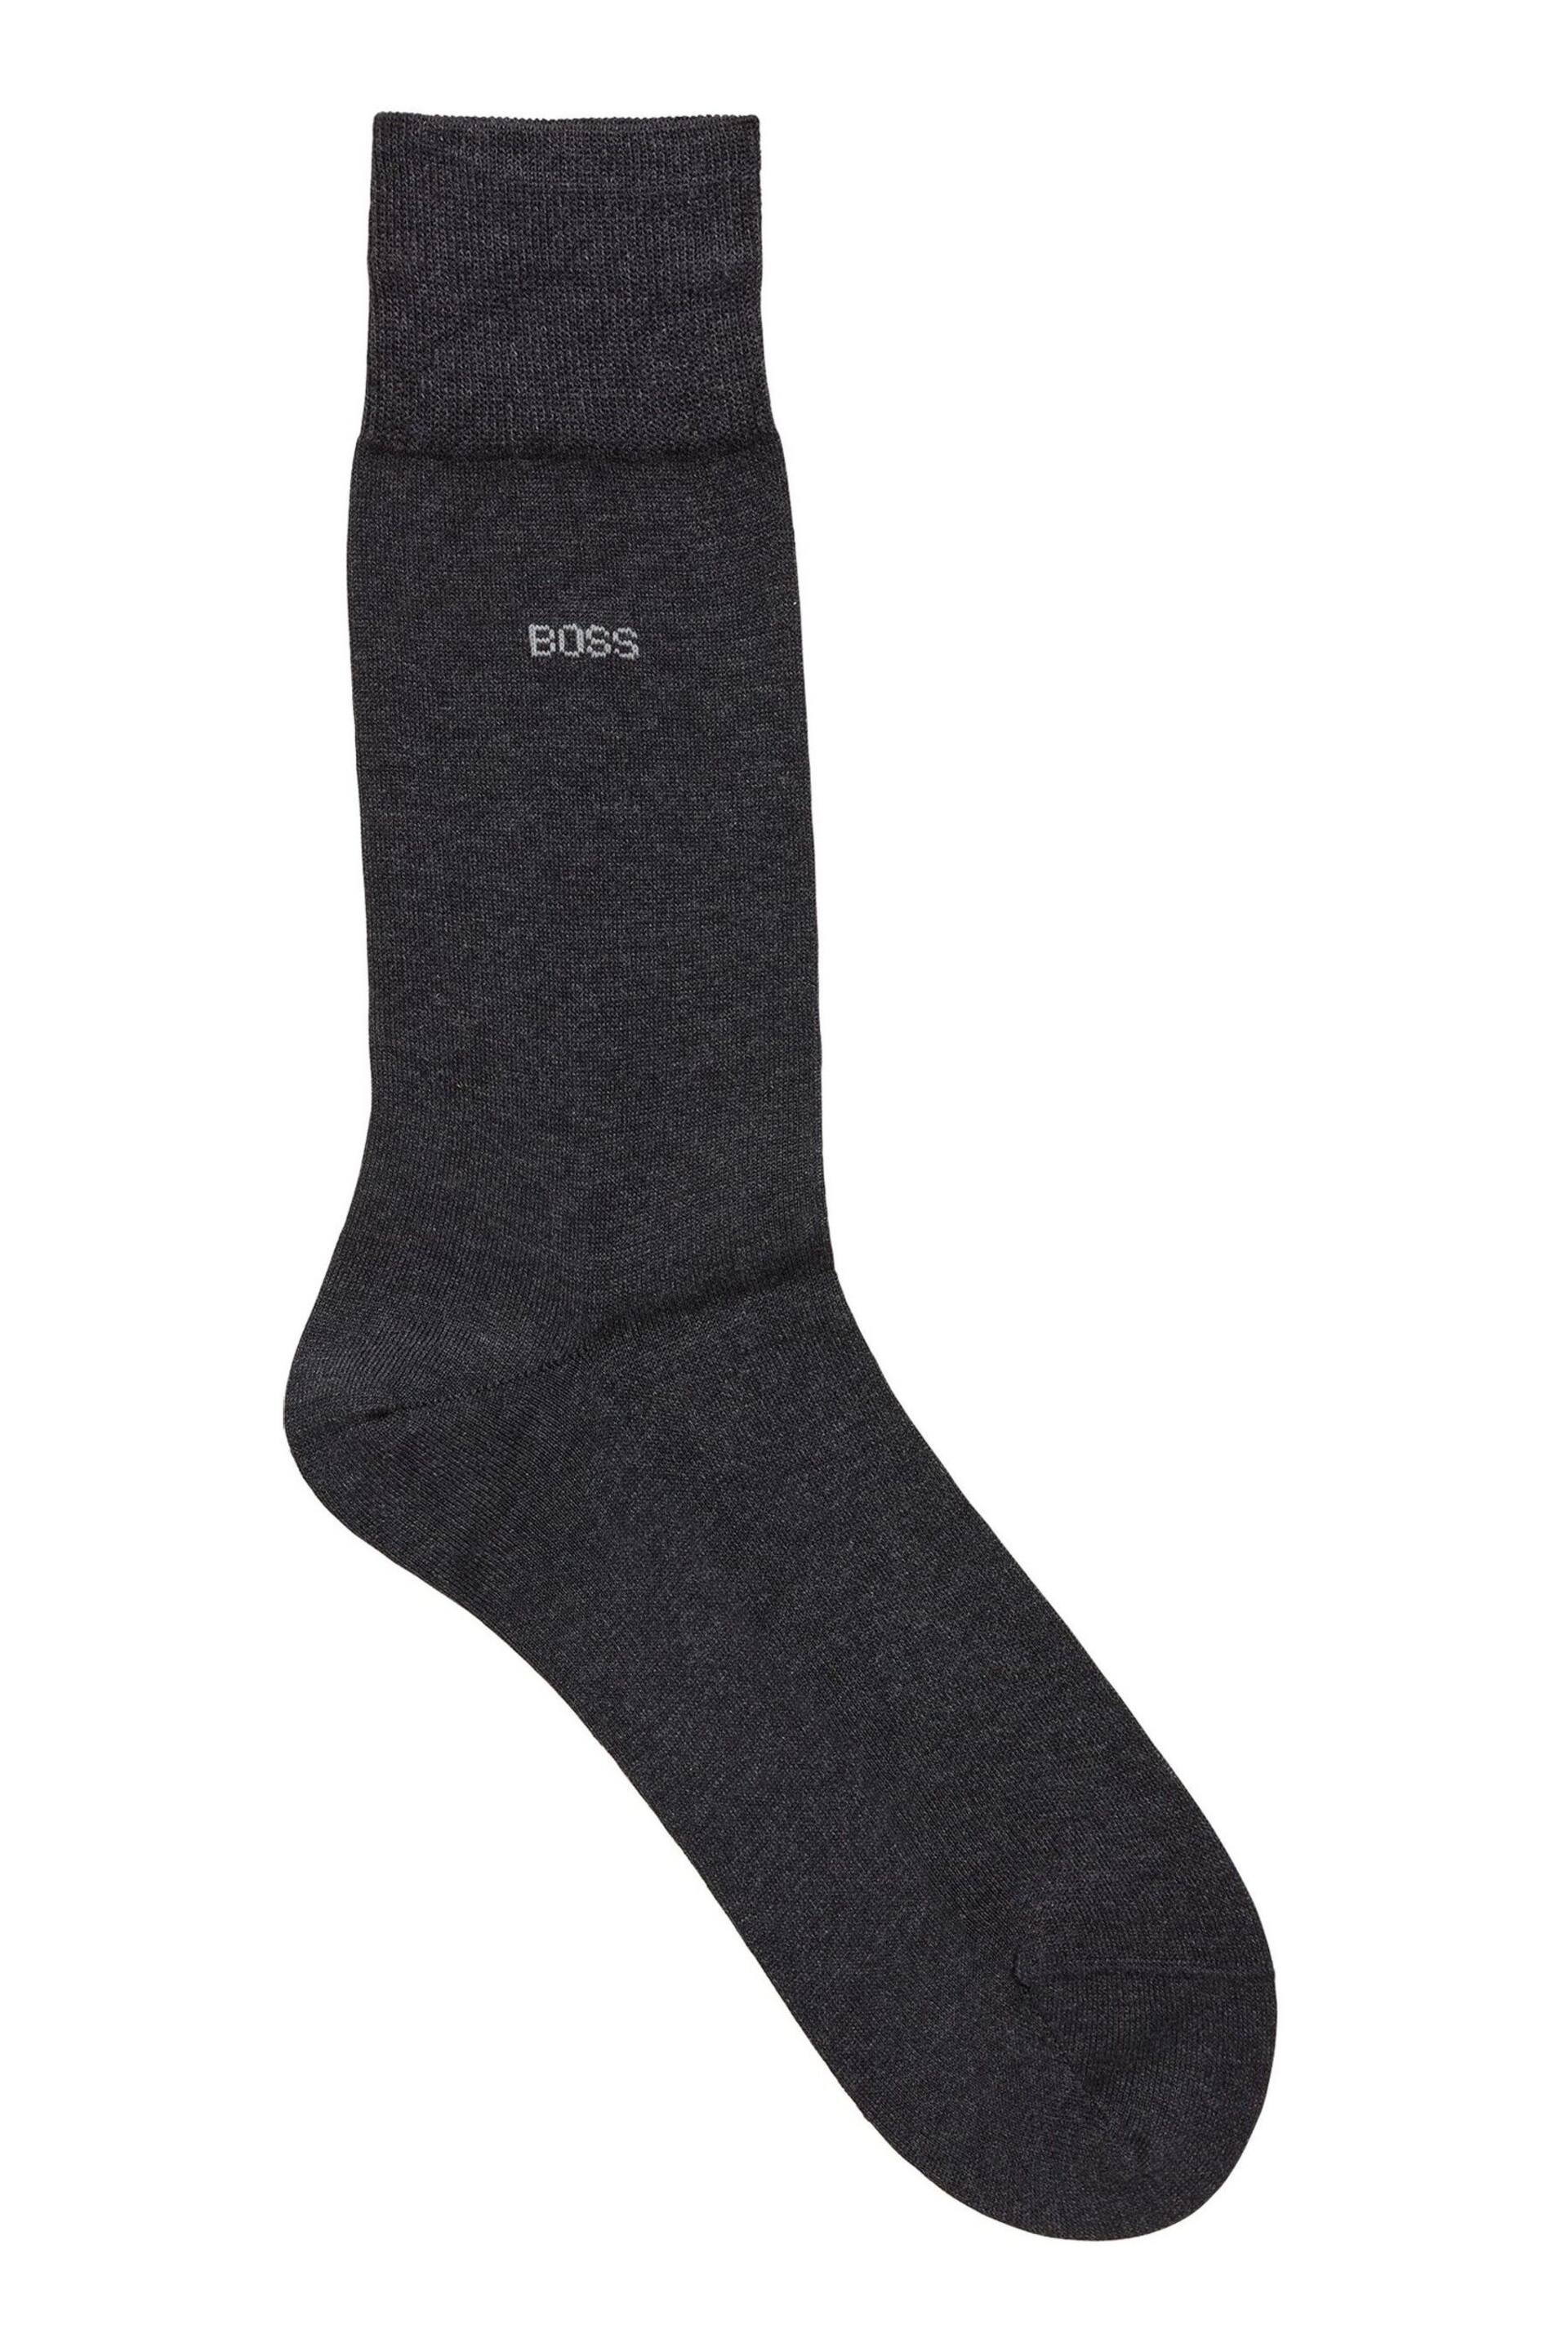 BOSS Grey George Socks - Image 1 of 3